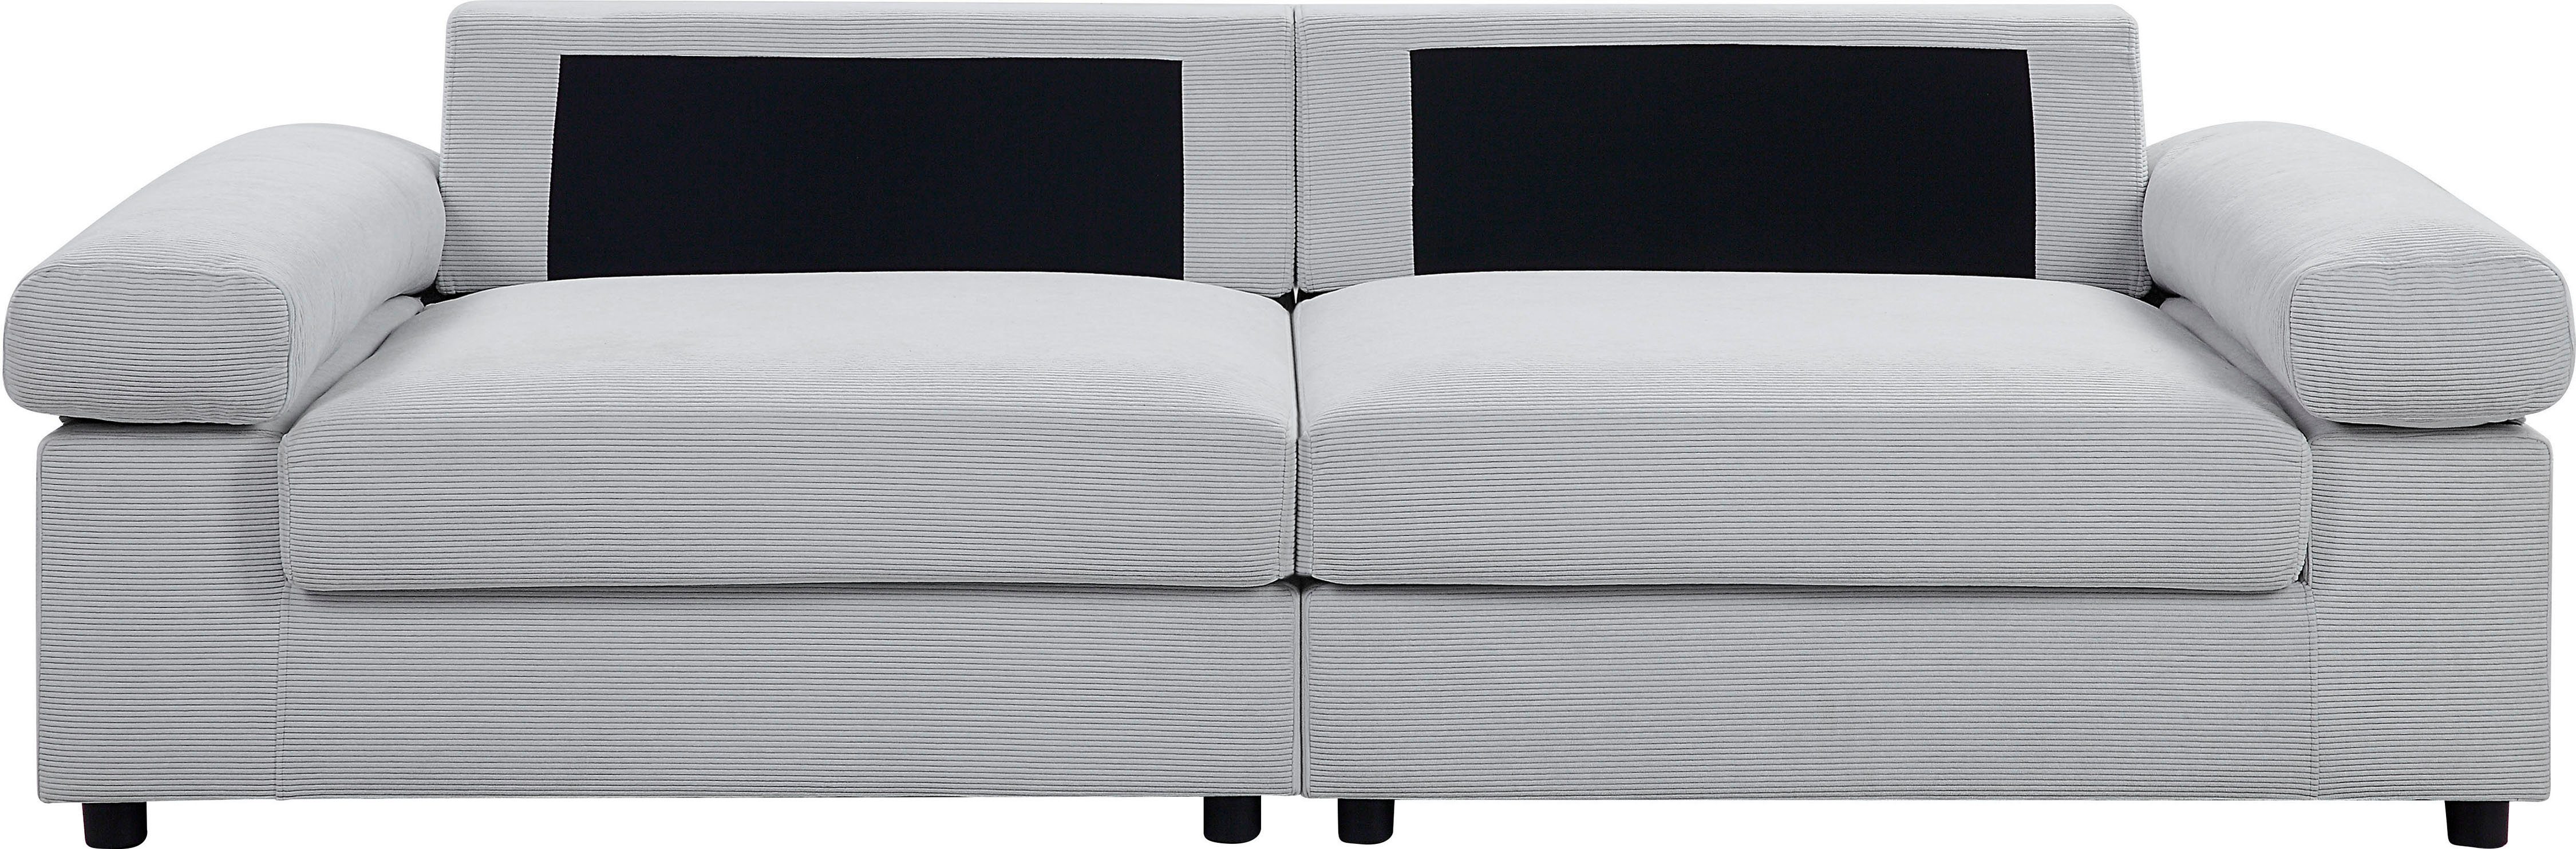 stellbar ATLANTIC collection Federkern, XXL-Sitzfläche, mit mit Big-Sofa Raum frei Bjoern, im grau home Cord-Bezug,